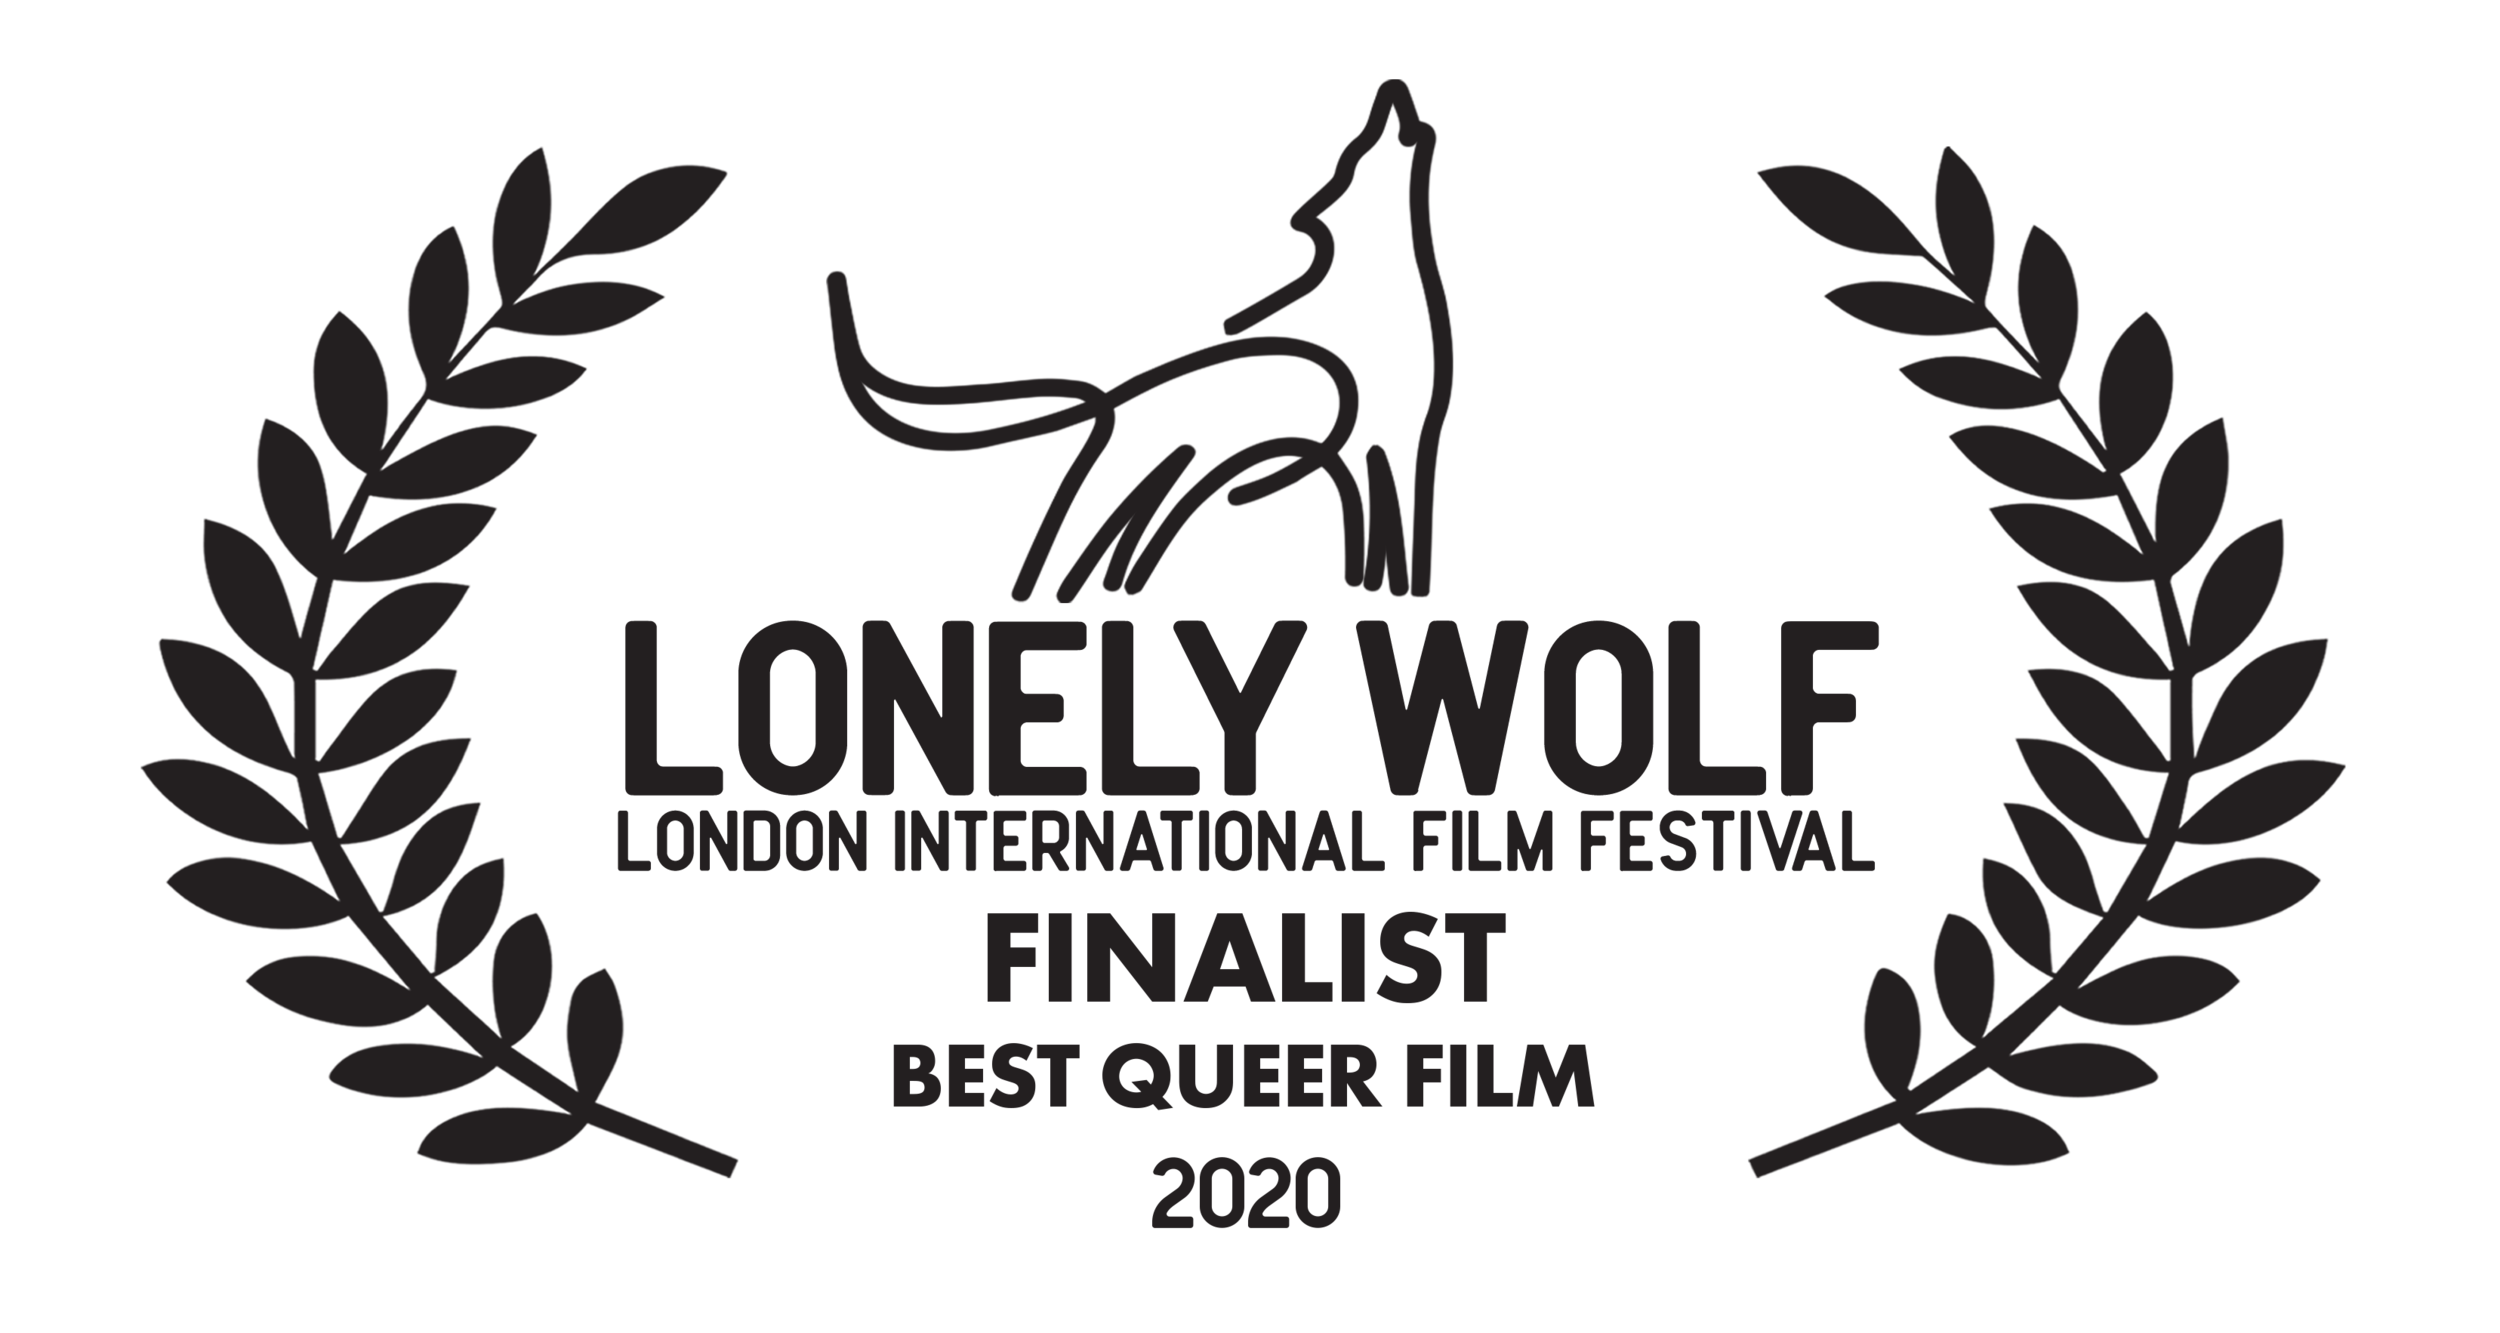 LonelyWolf_Finalist Best Queer Film_Small Laurel.png